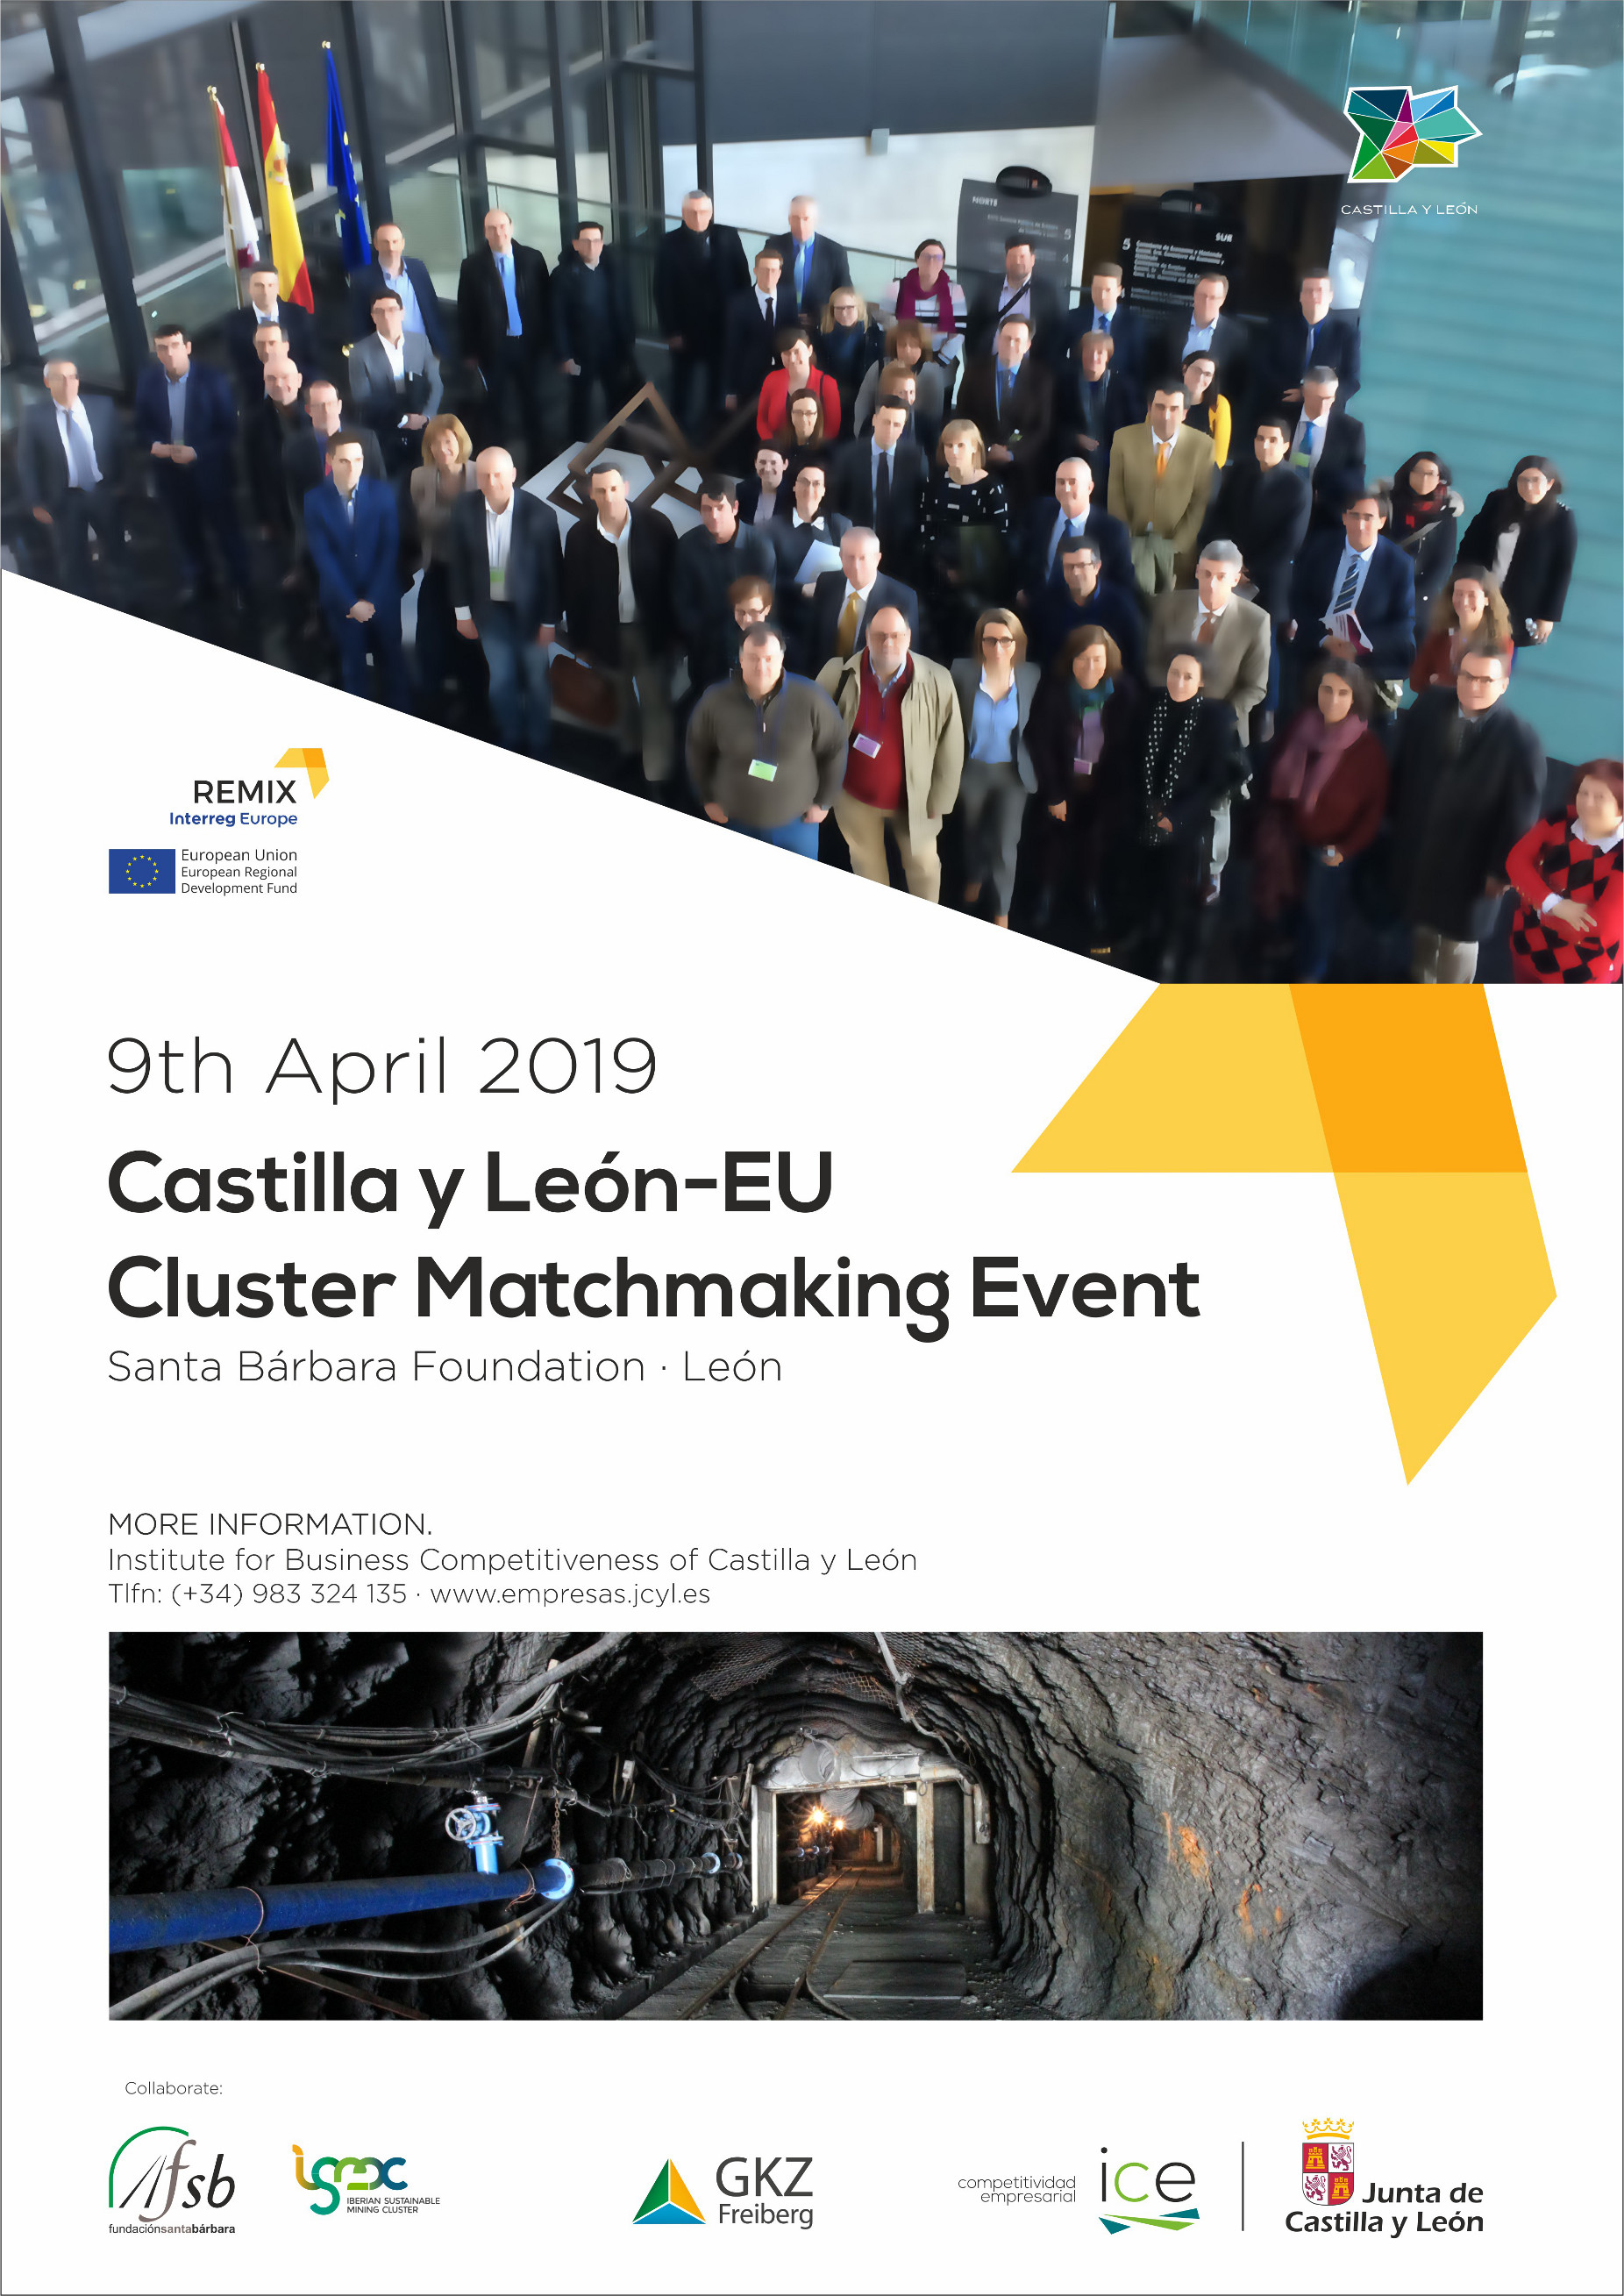 Castilla y León – EU Cluster Matchmaking Event